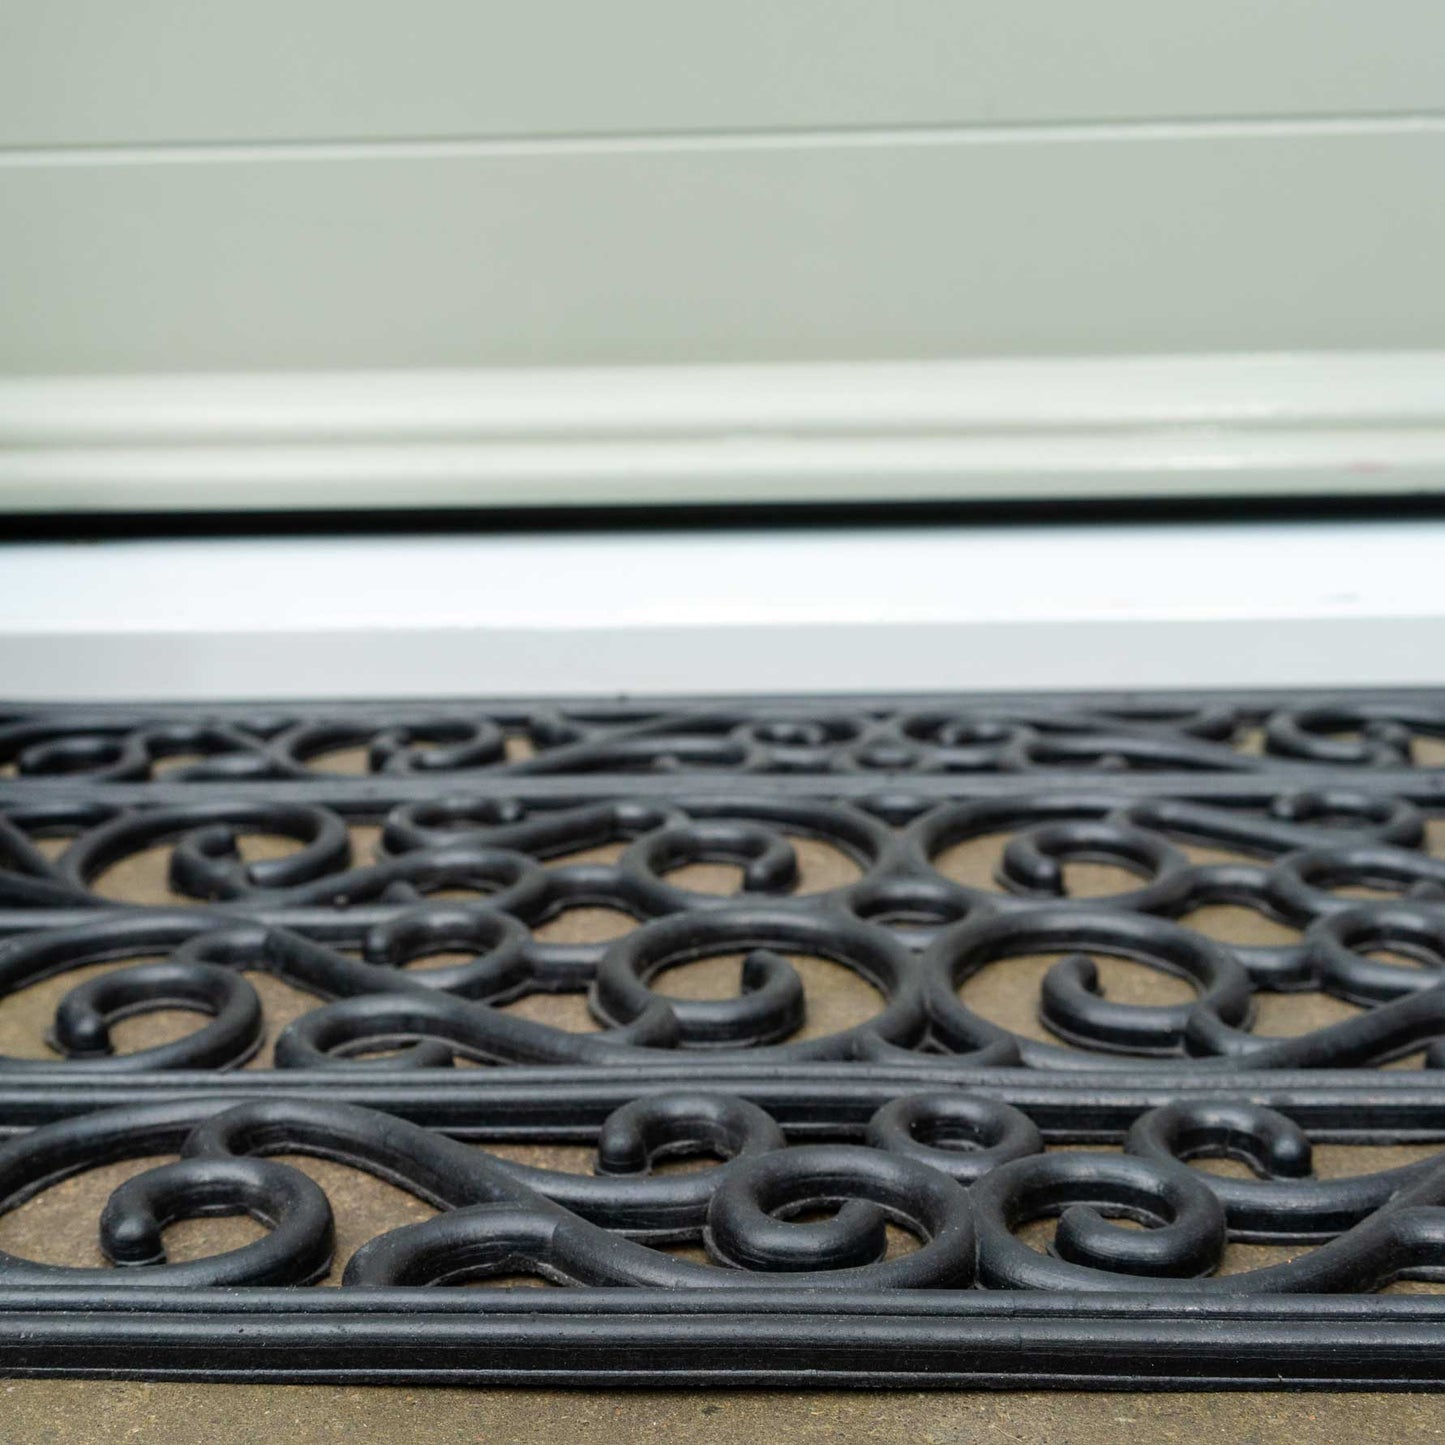 Long Ornate Iron Border Rubber Doormat